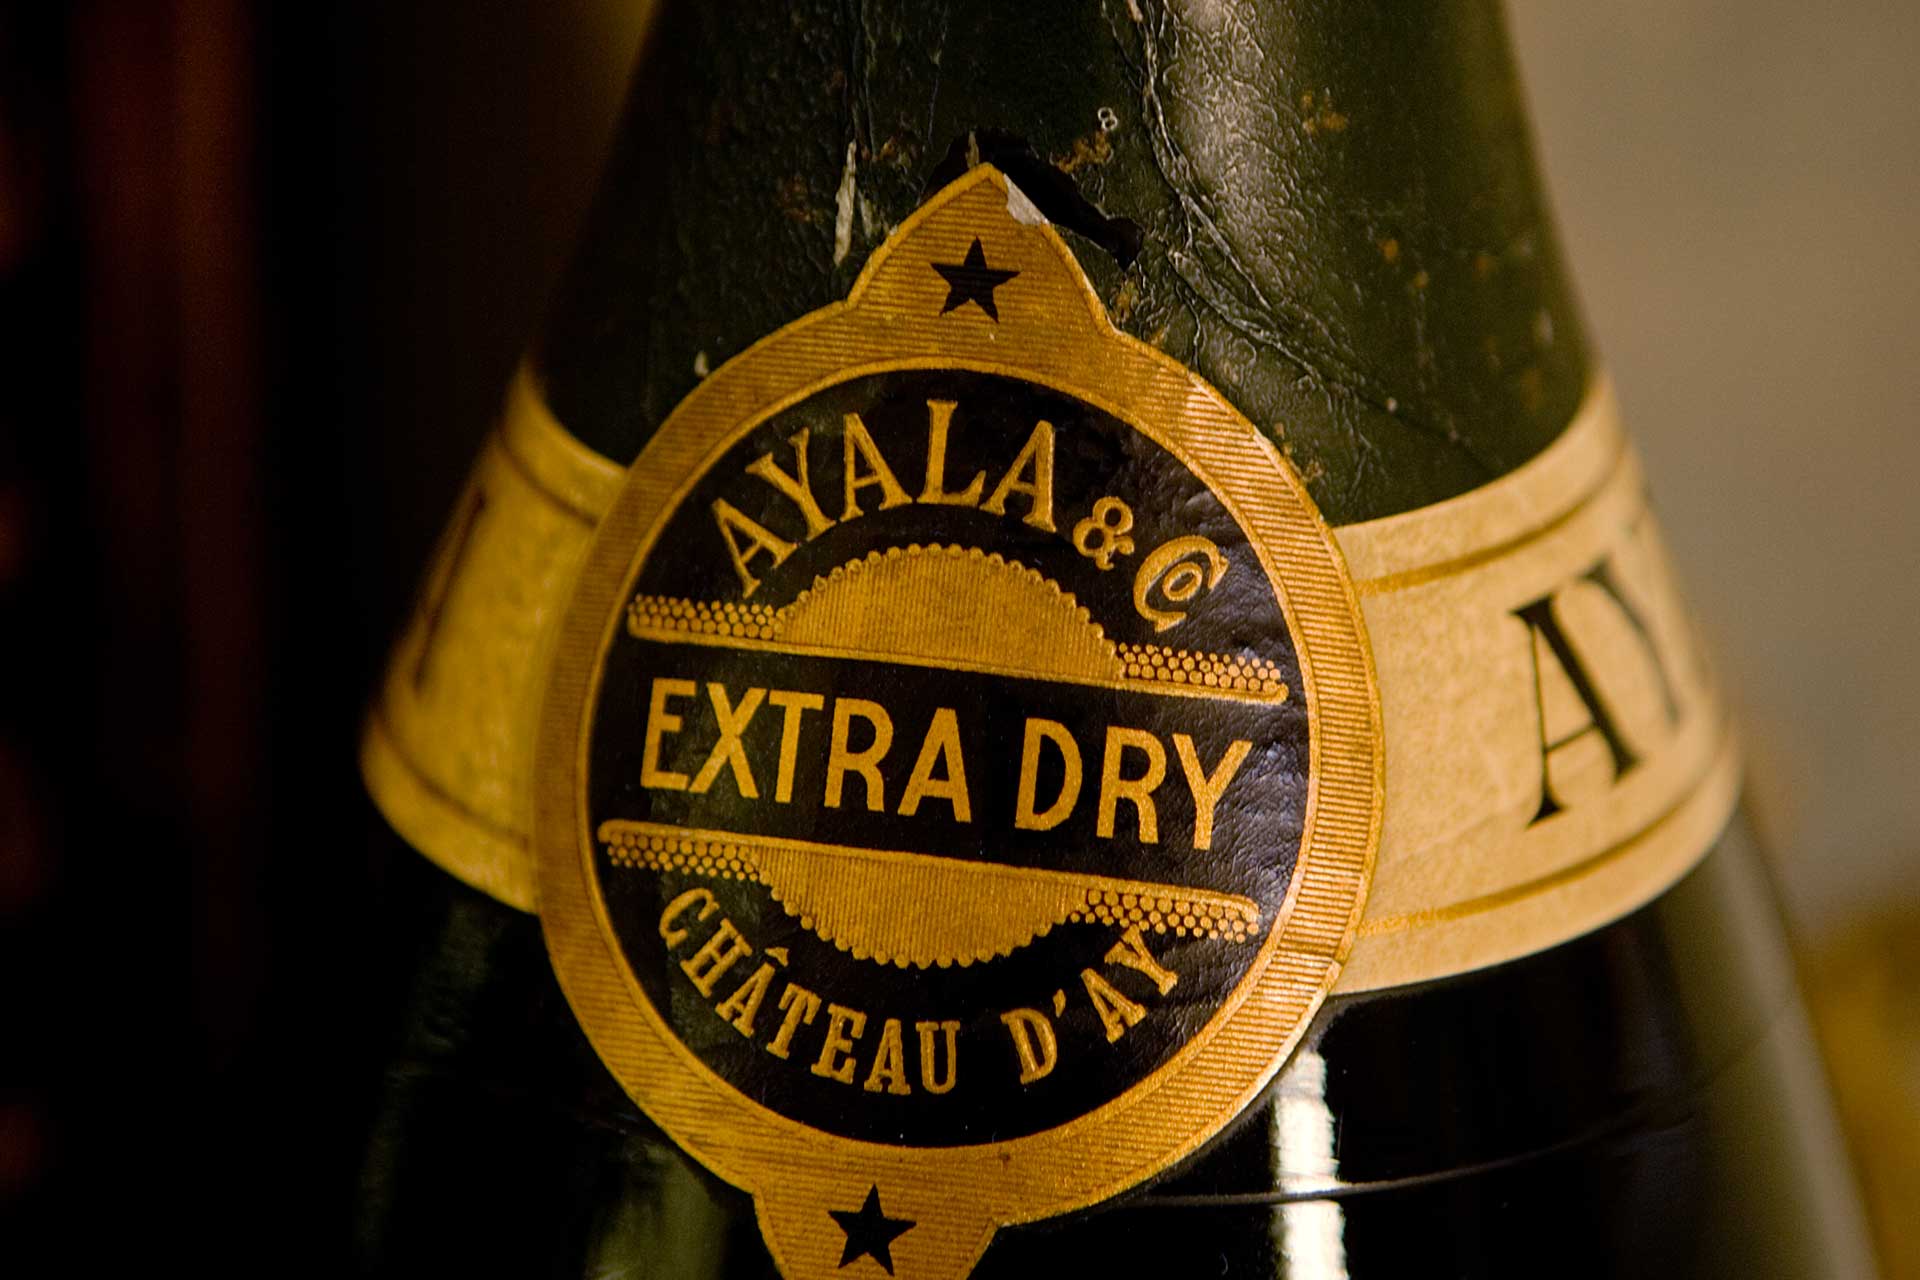 Ayala Champagner Historie